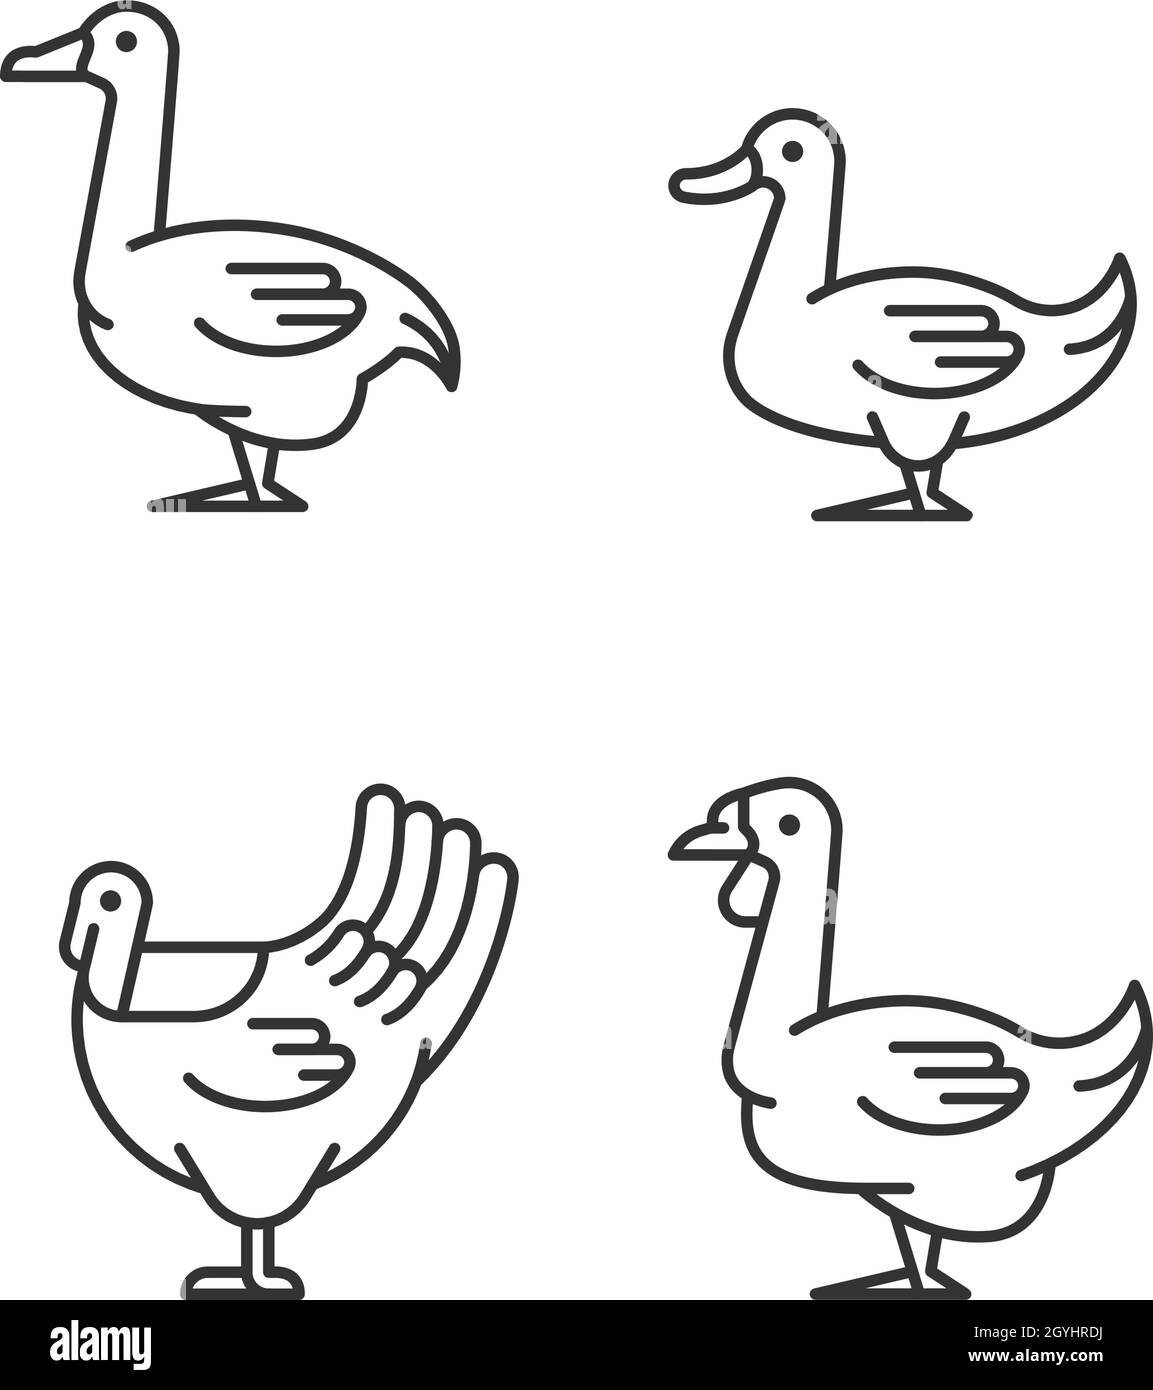 Lineare Symbole für Wasservögel gesetzt Stock Vektor